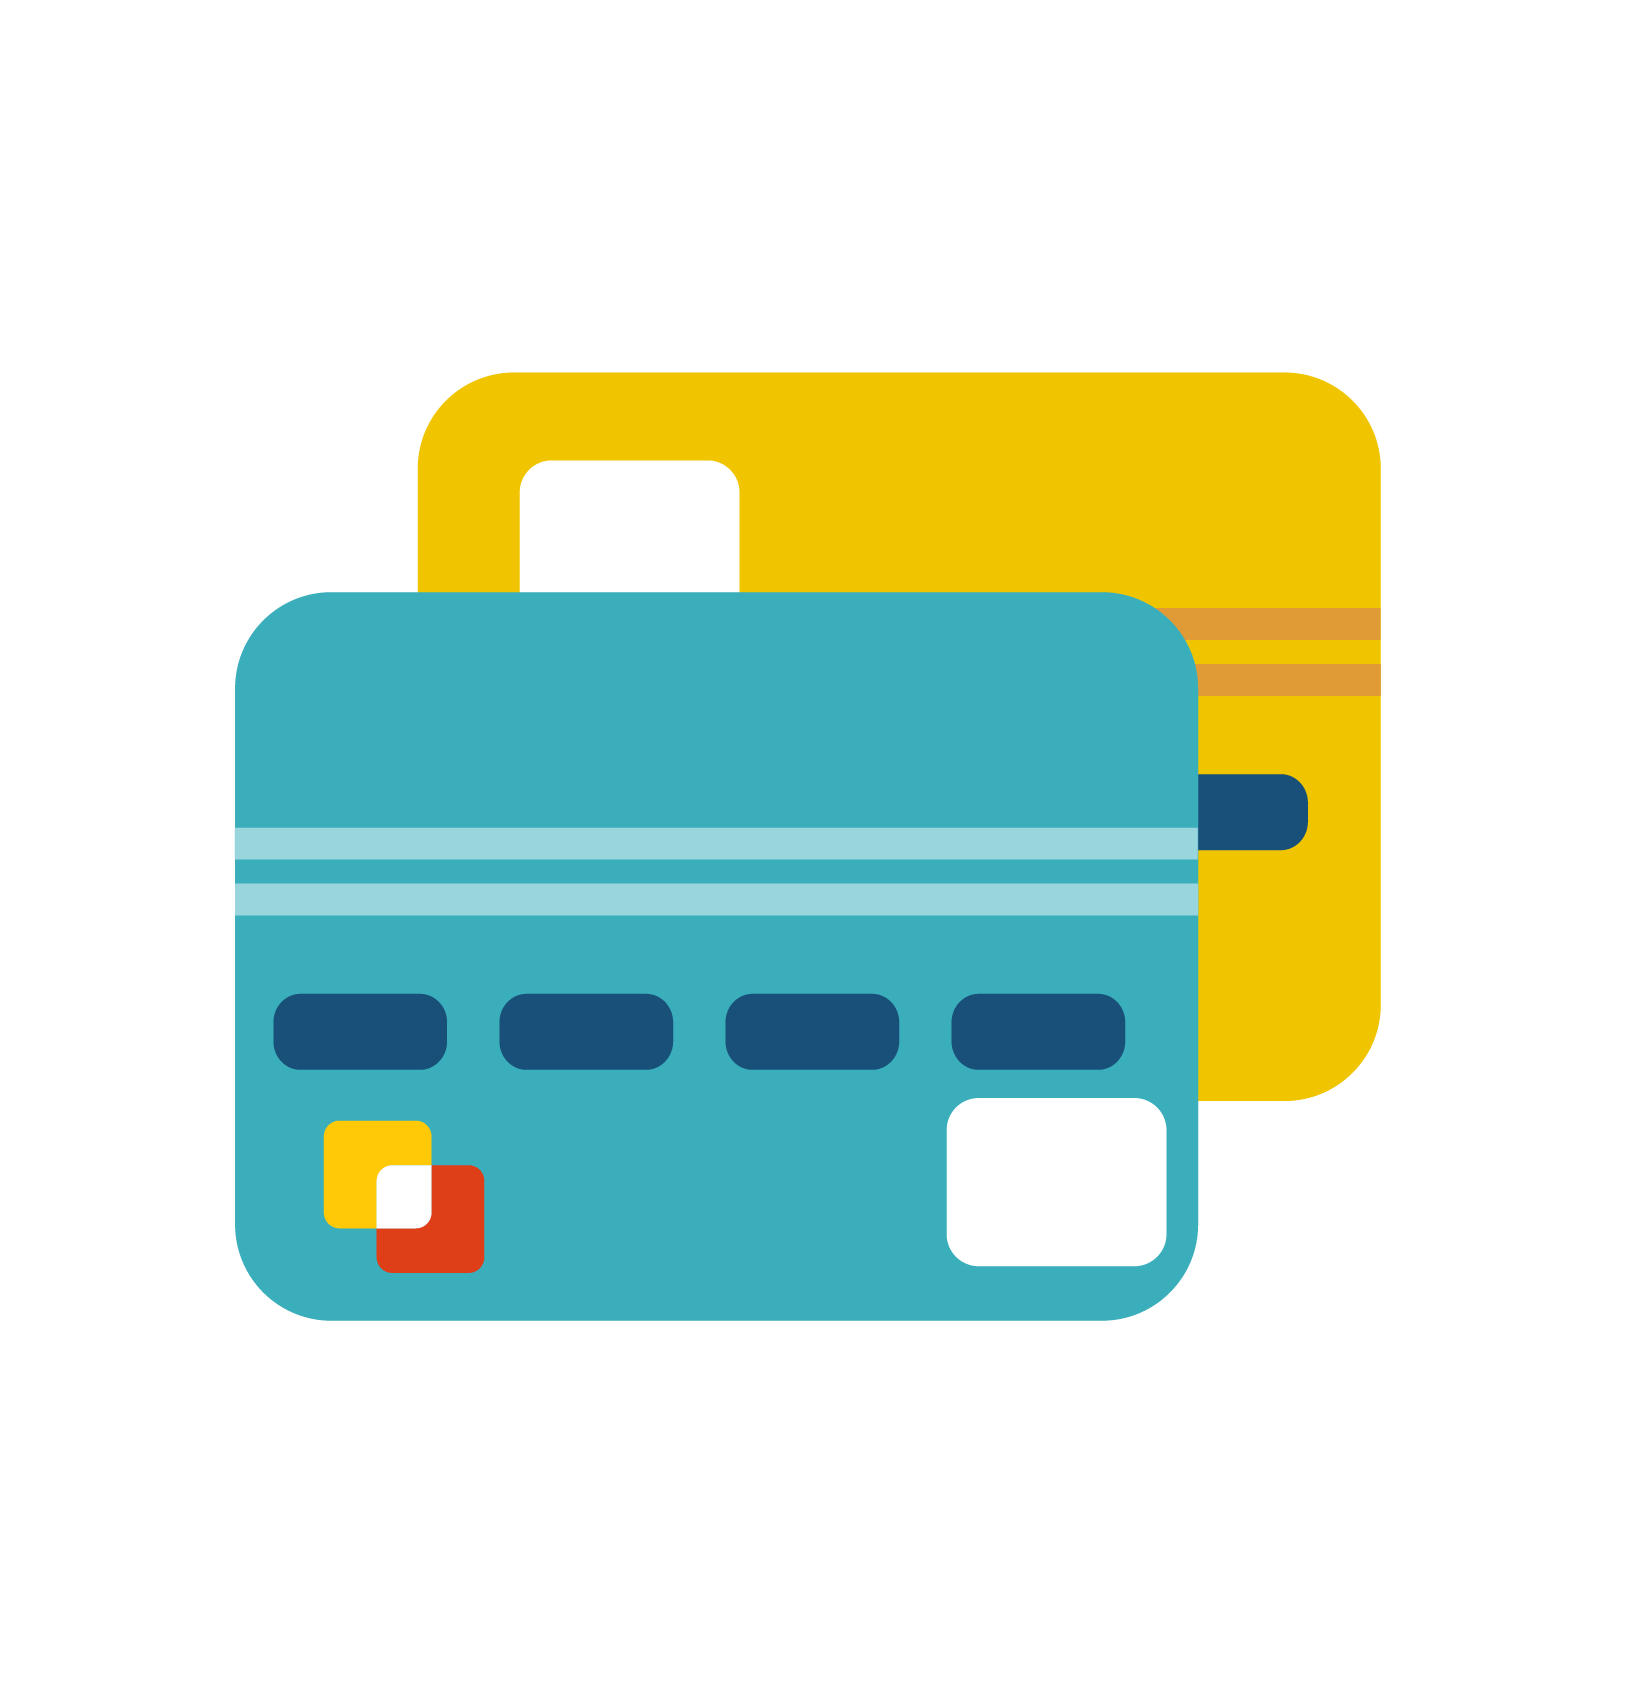 icon credit card